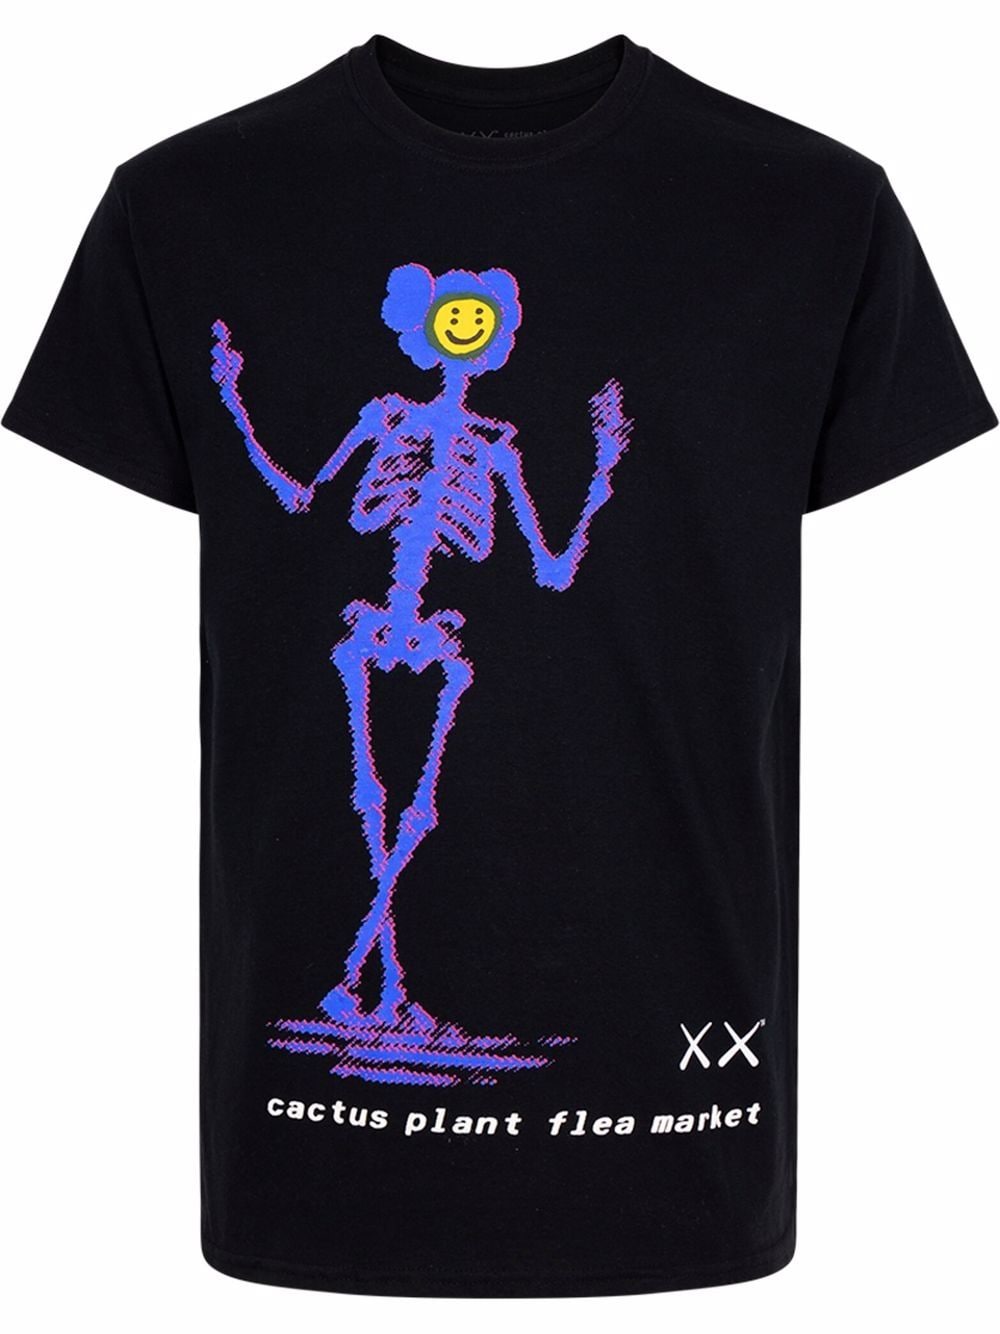 KAWS x Cactus Plant Flea Market TEE